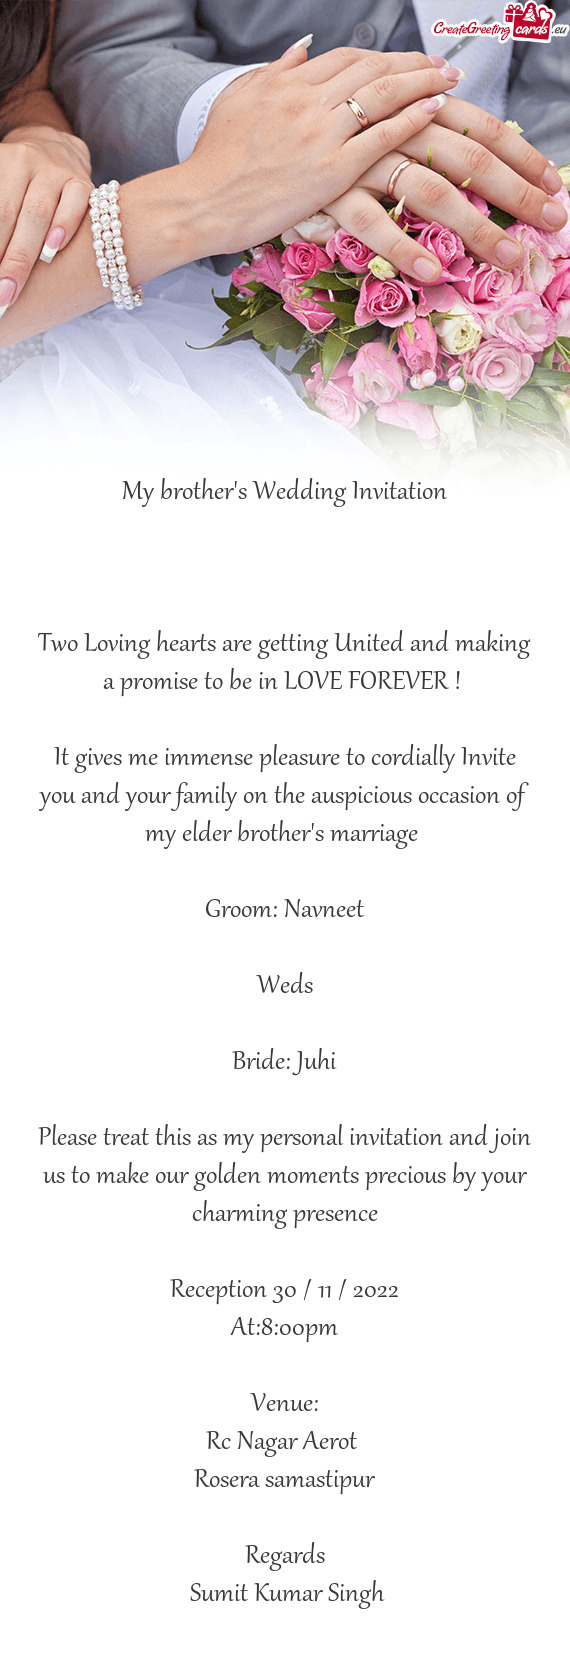 Bride: Juhi